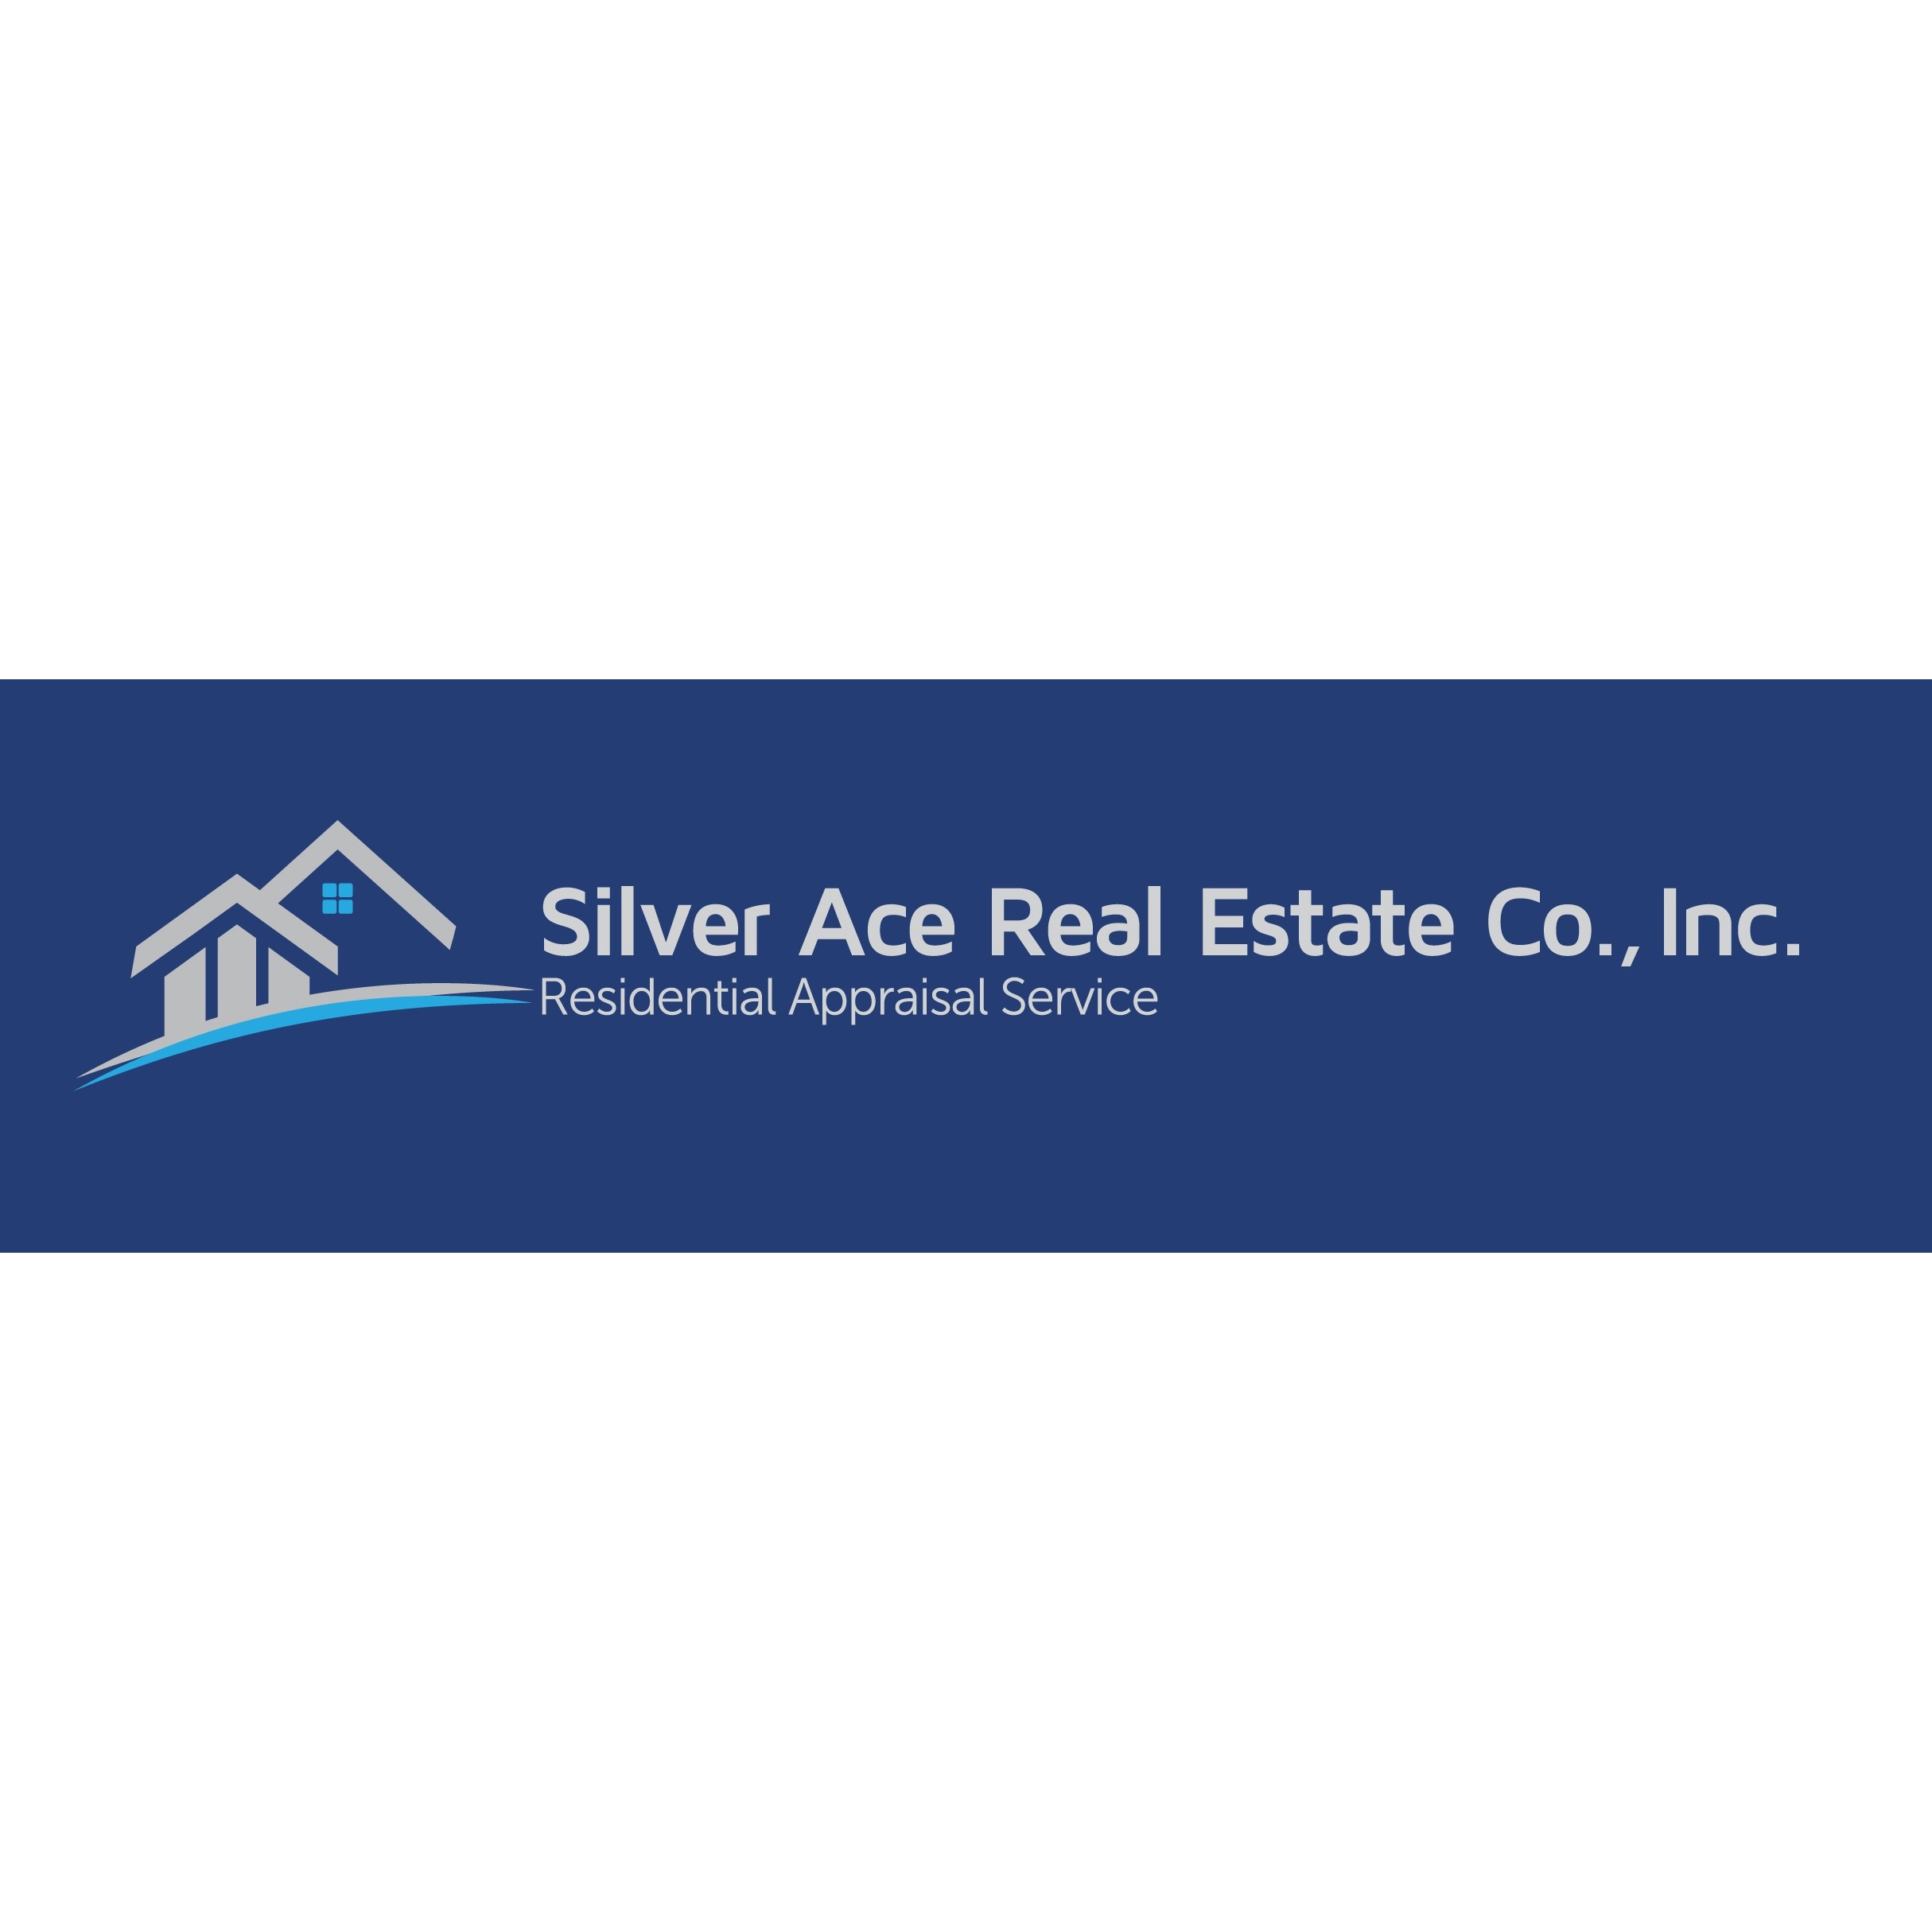 Silver Ace Real Estate Co, Inc. Los Angeles Appraiser, Culver City